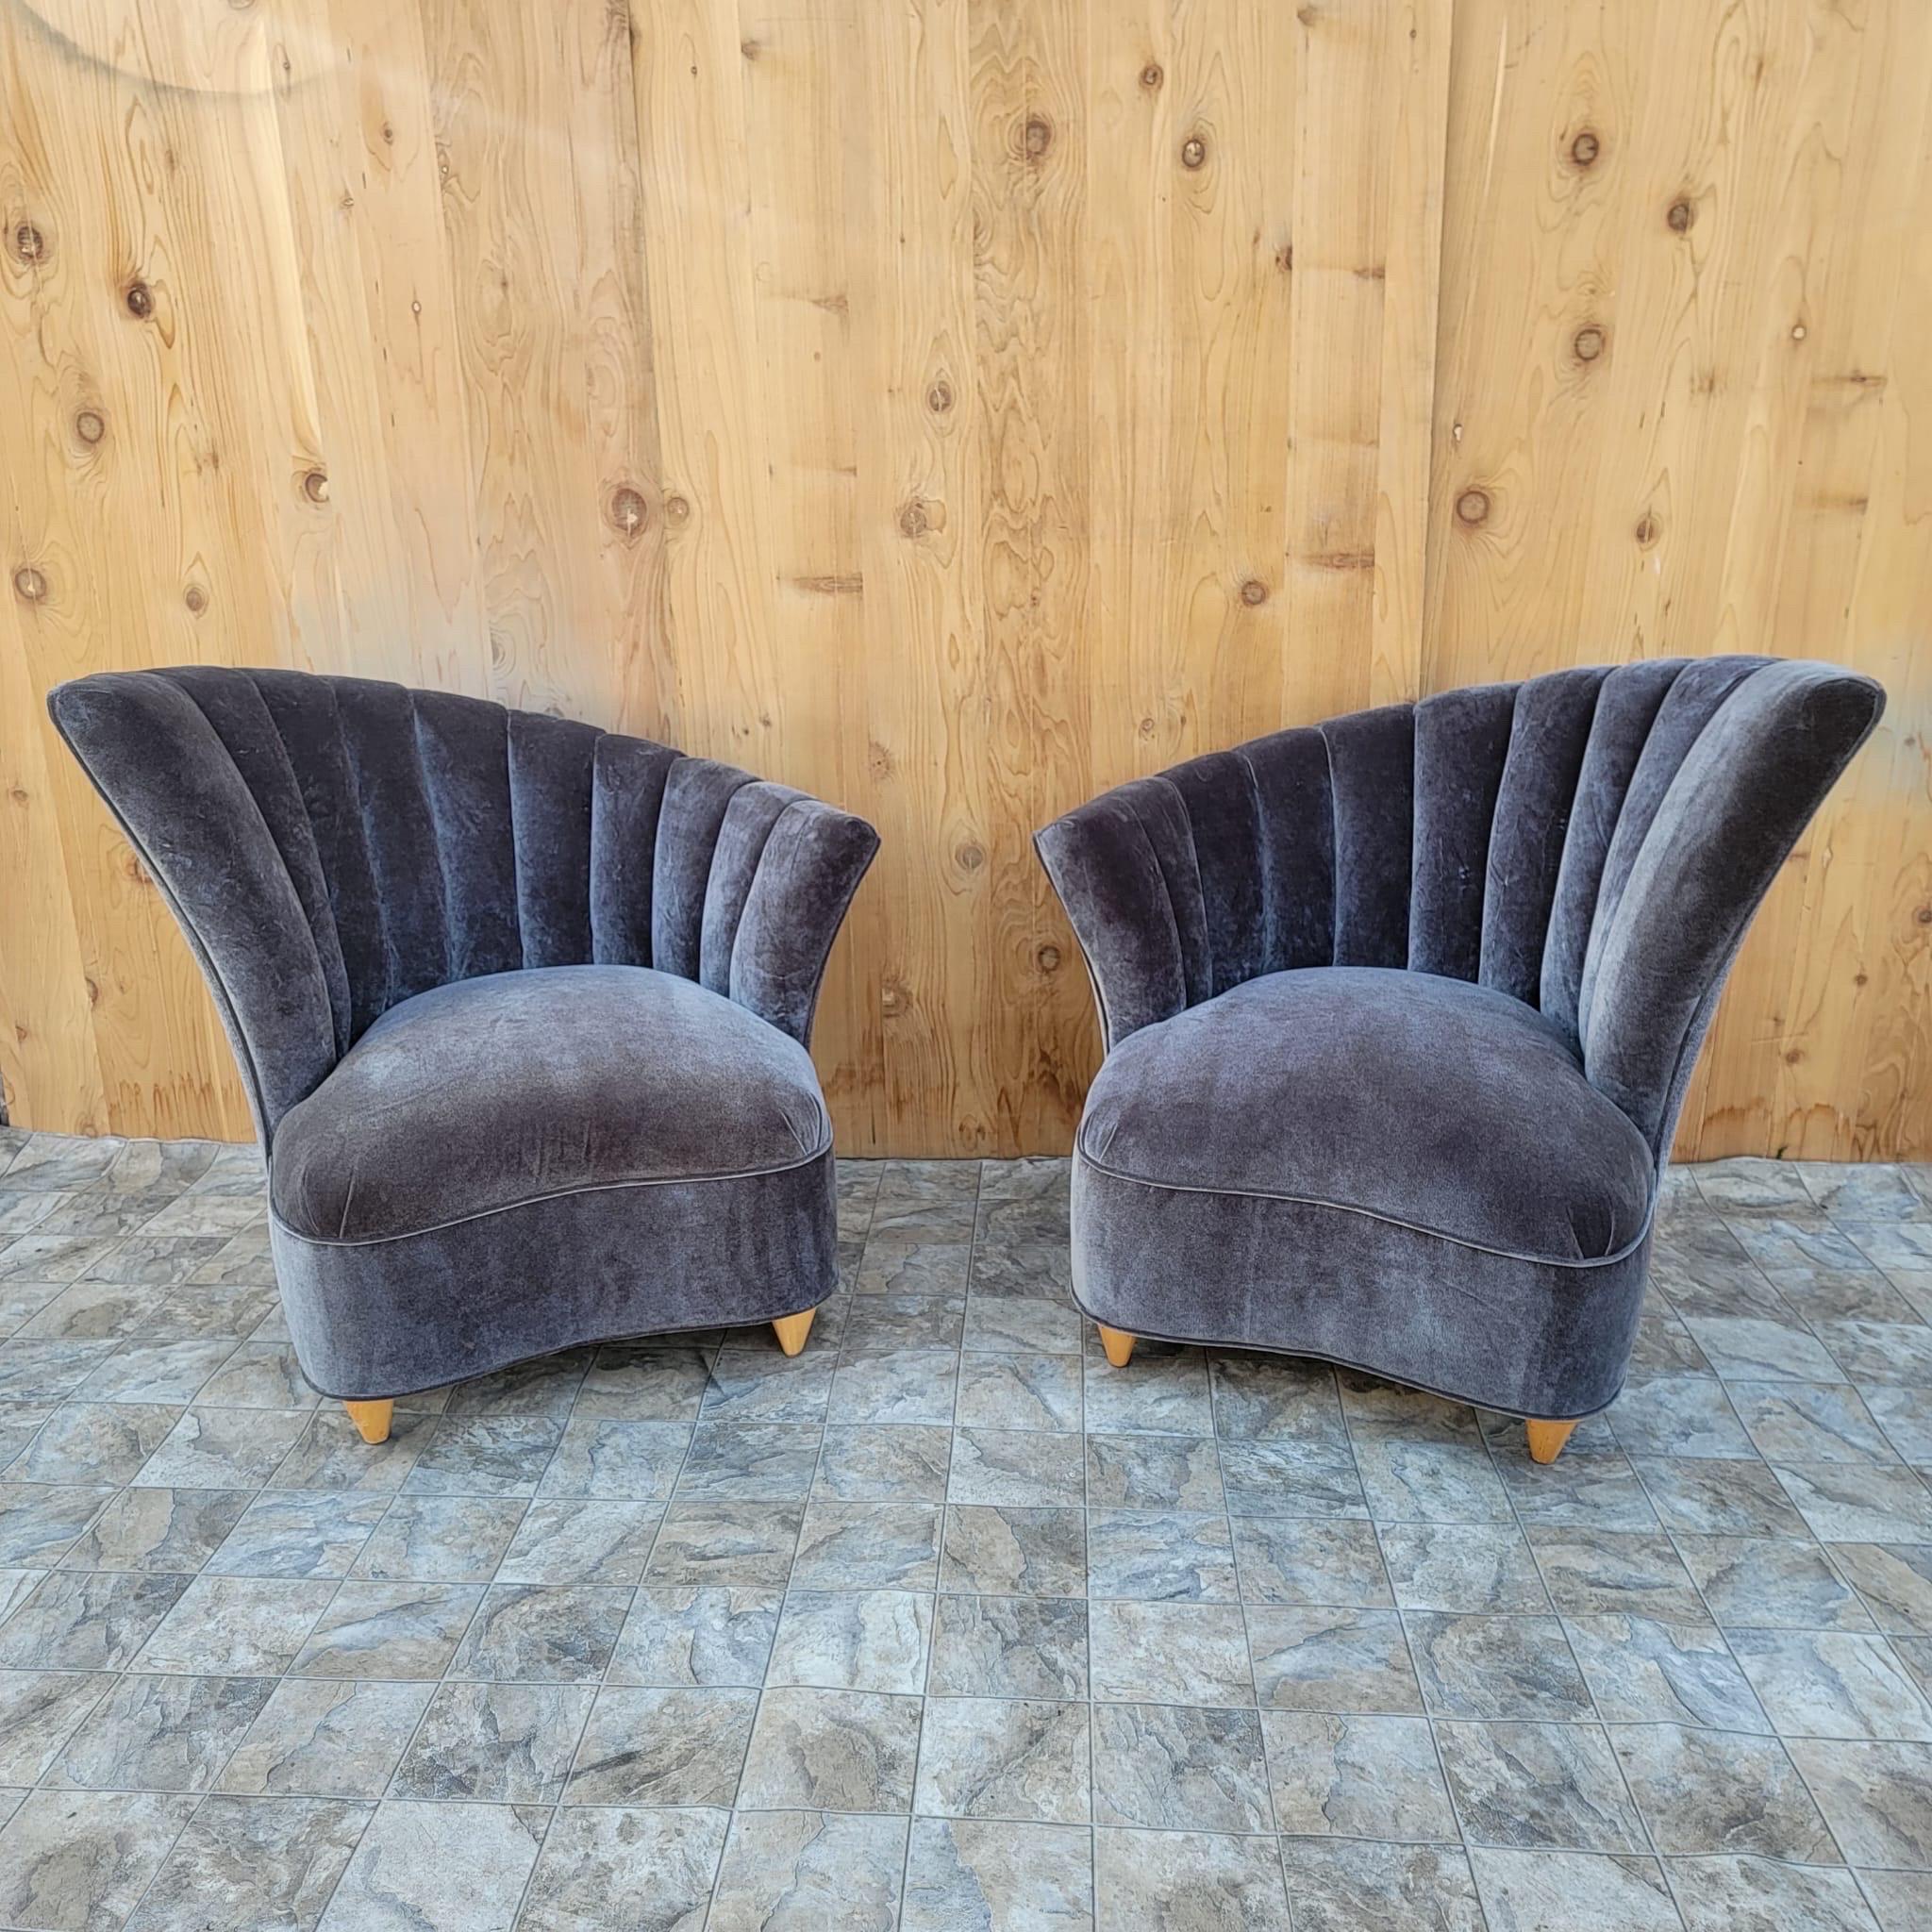 Art Deco Asymmetrical Channel Fan Back Lounge Chairs und Ottoman Newly Upholstered - 3 Piece Set 

Gorgeous 1940s Set von Art Deco asymmetrische Fan Channel-Back Lounges mit Ottoman. Dieses Set wurde komplett individuell in einem wunderschönen